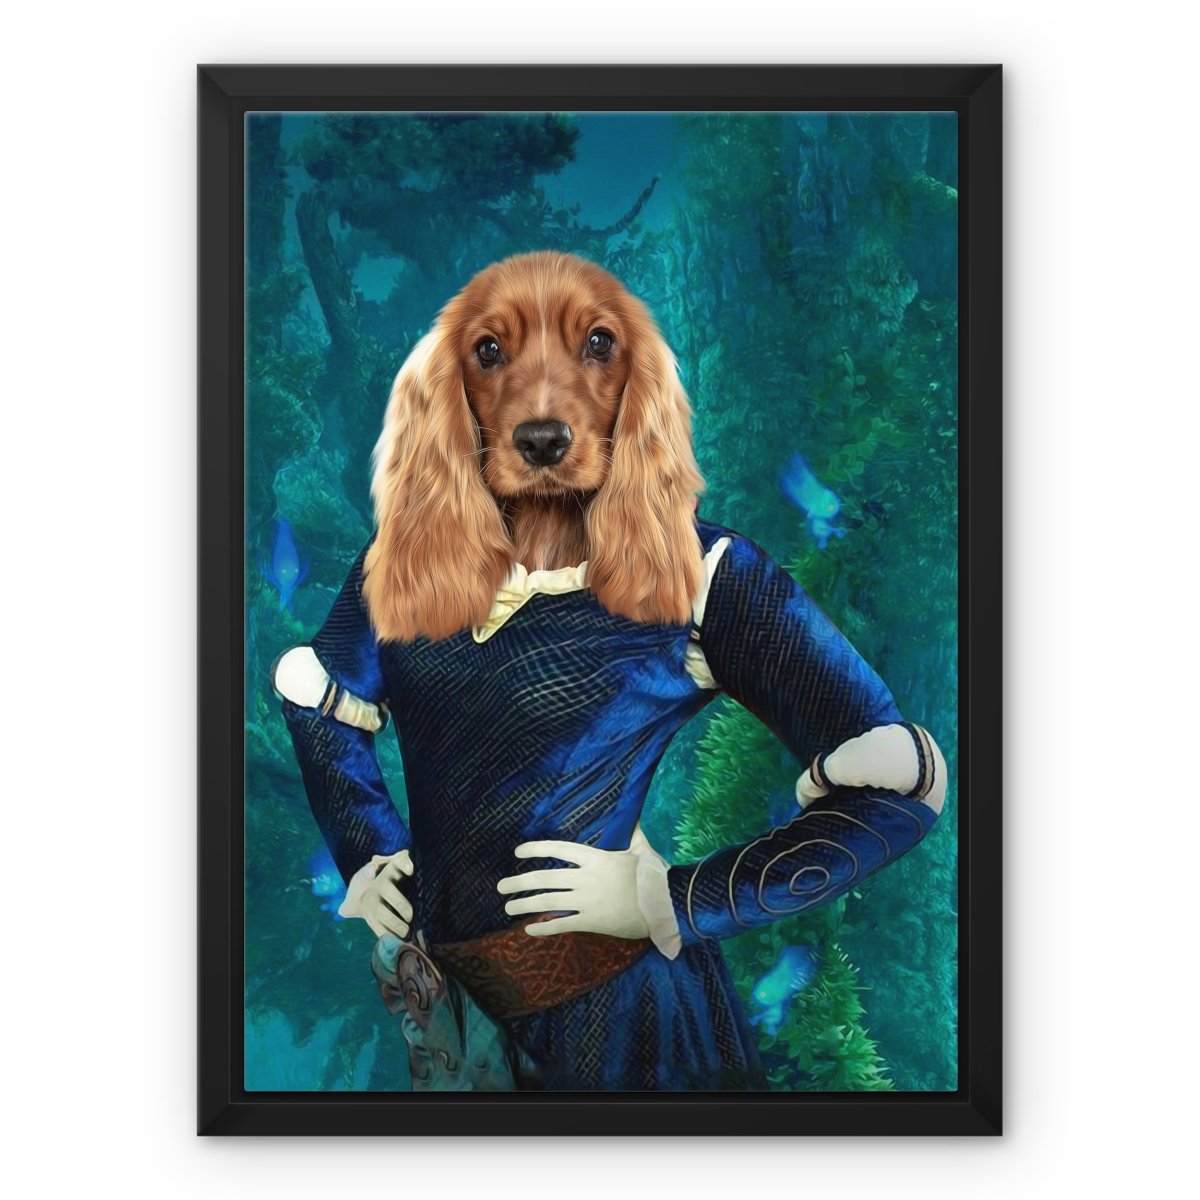 Merida (Brave Inspired): Custom Pet Canvas - Paw & Glory - #pet portraits# - #dog portraits# - #pet portraits uk#paw & glory, pet portraits canvas,personalized dog and owner canvas uk, dog canvas, pet photo to canvas, custom pet art canvas, canvas dog carrier